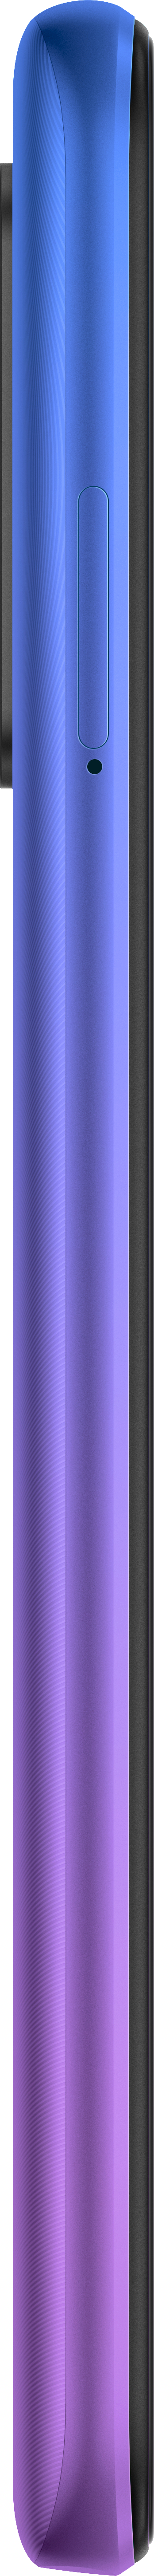 Dual Sunset SIM XIAOMI REDMI 9 Purple GB 64